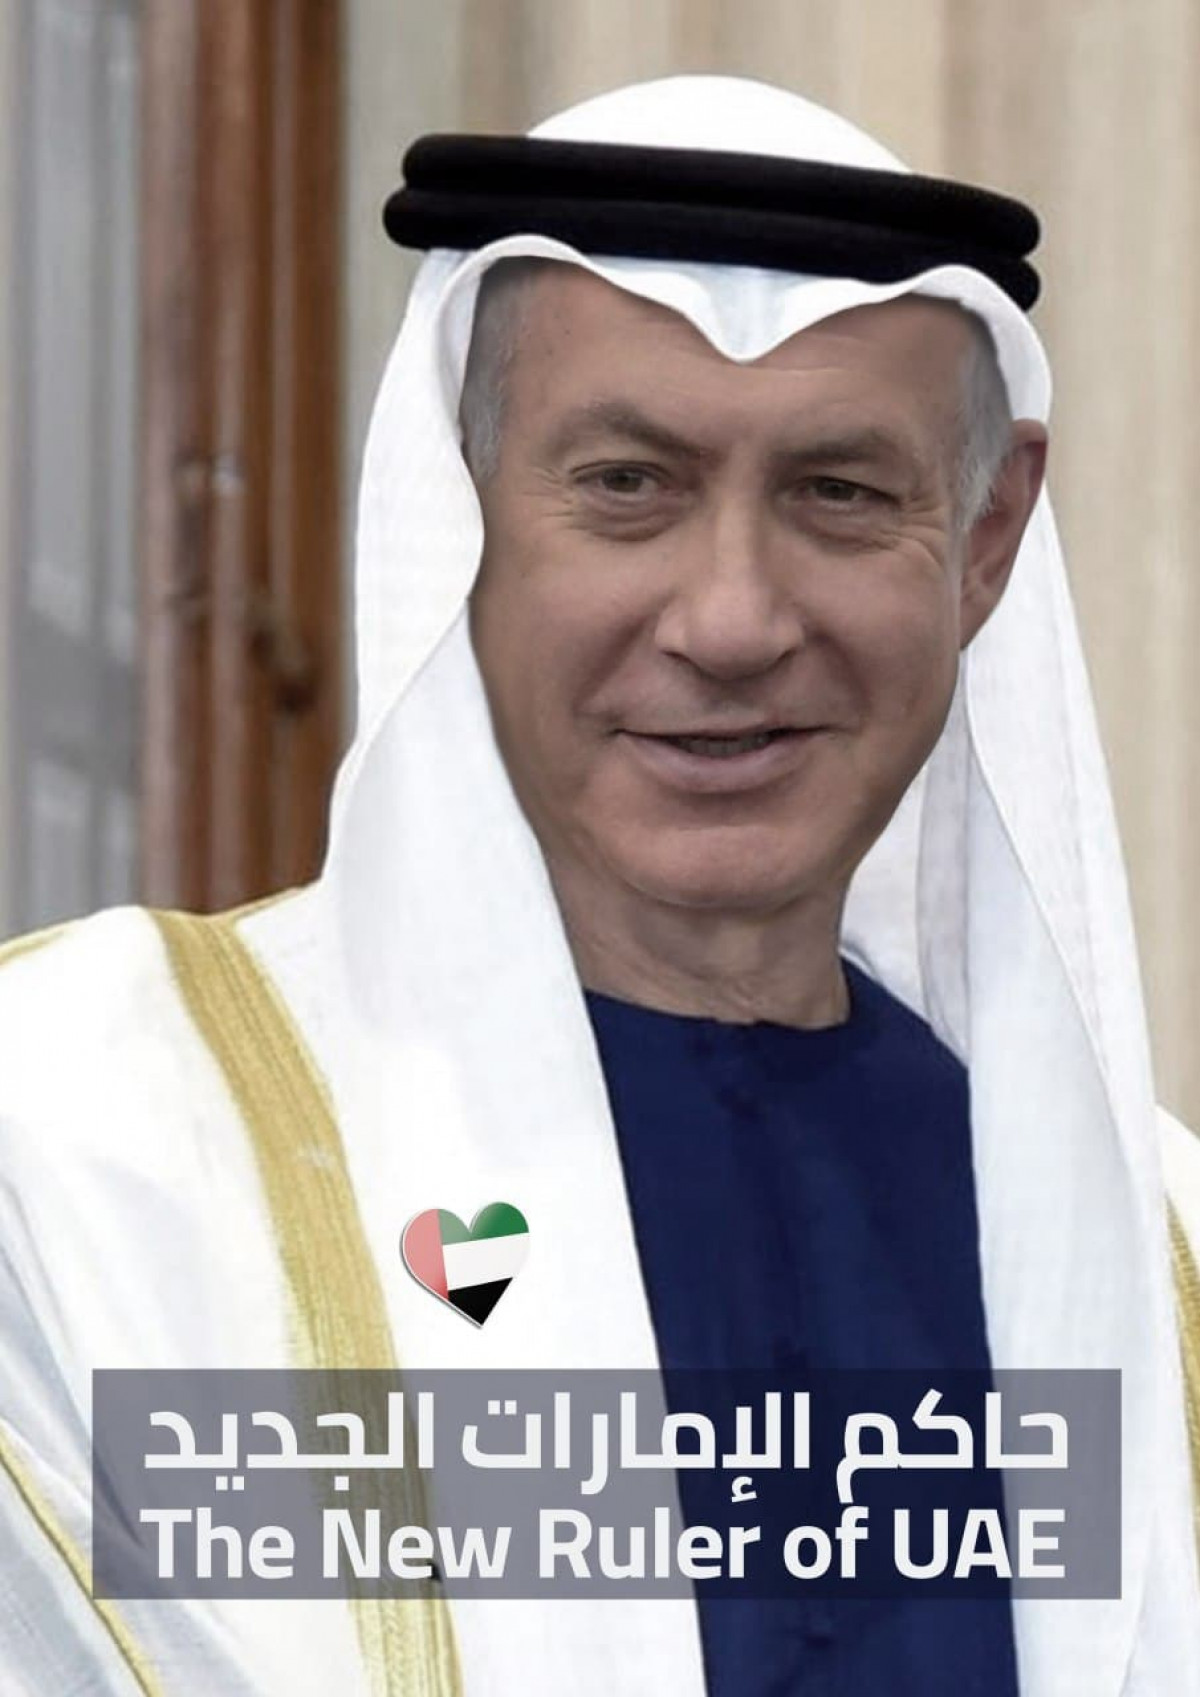 The New Ruler of UAE